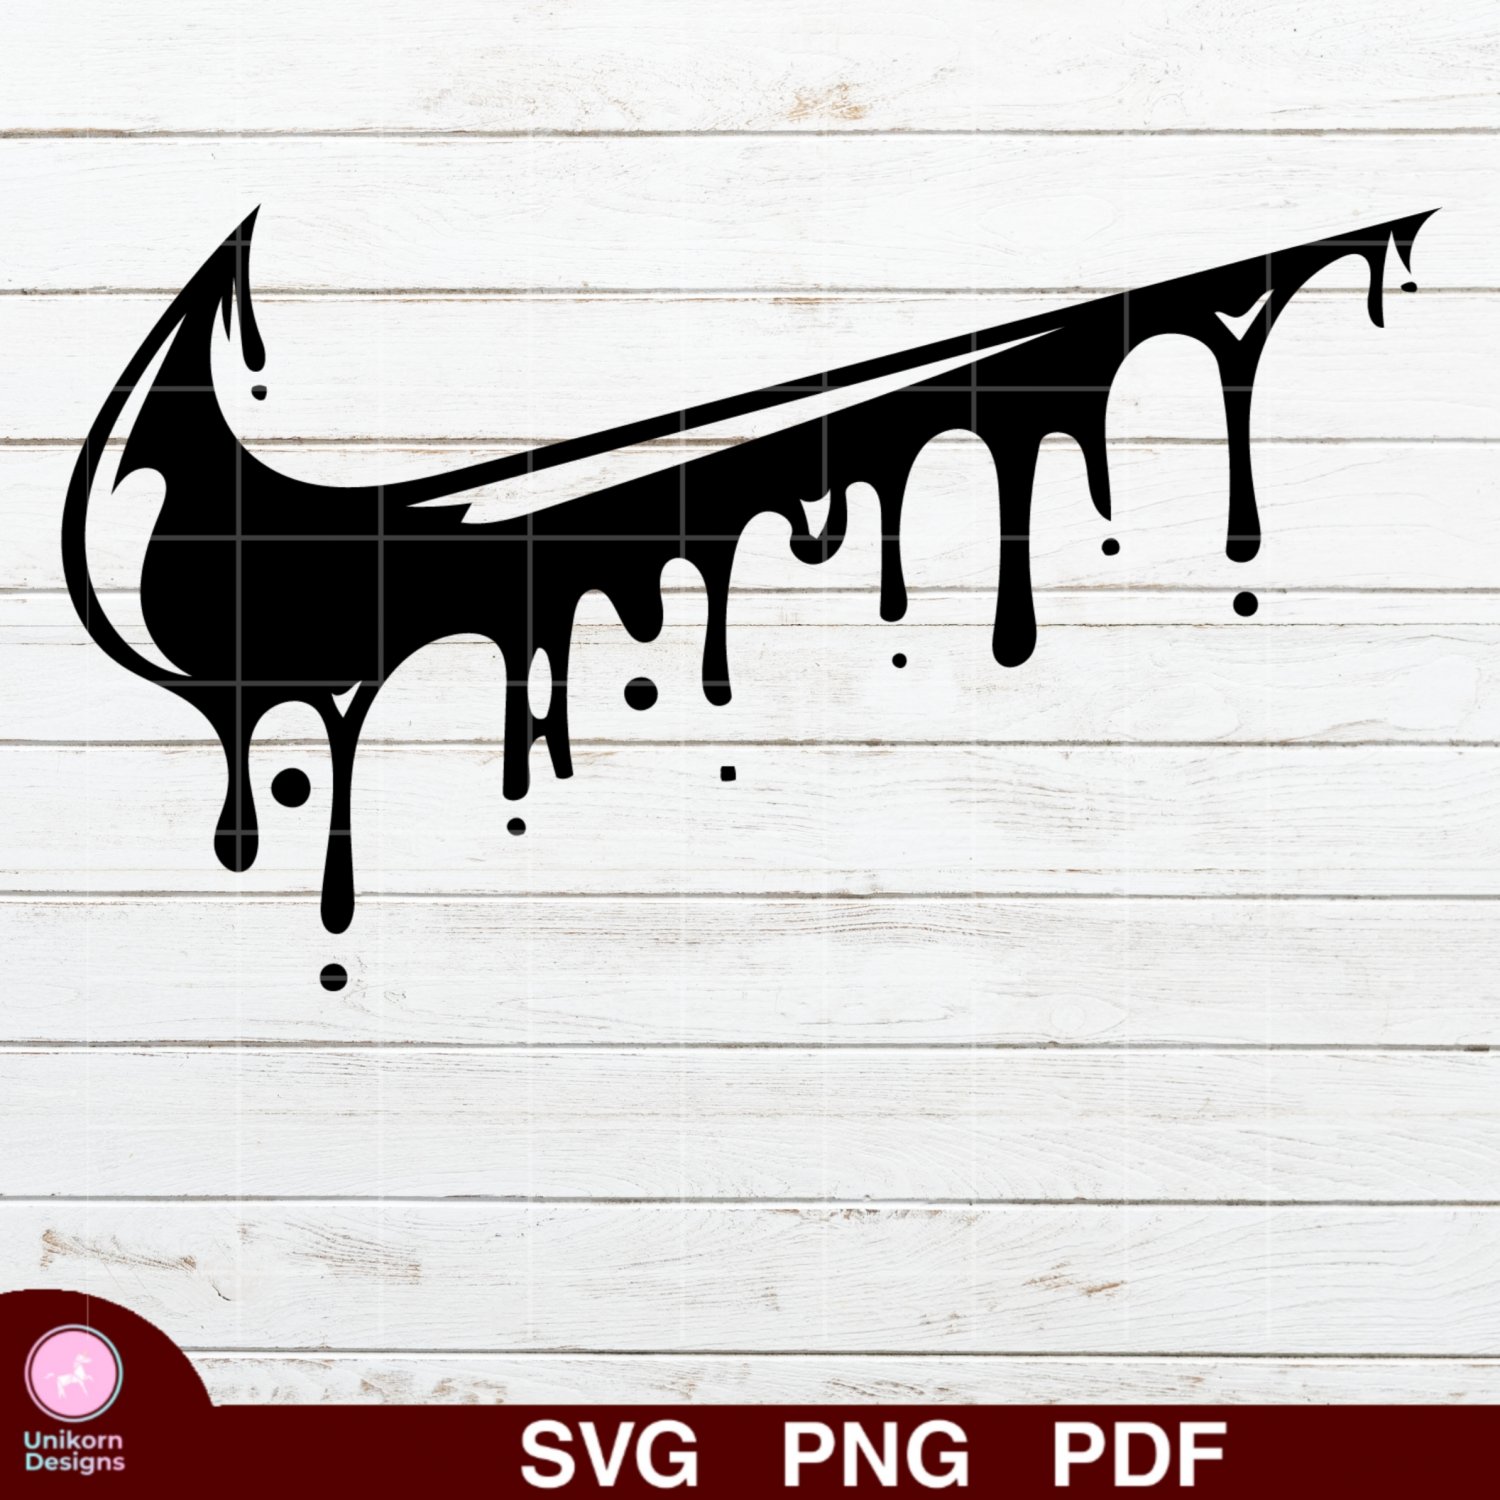 Nike Logo Drip Design 4 SVG PNG Silhouette Cut Files Cricut Vector Graphic Clipart Instant